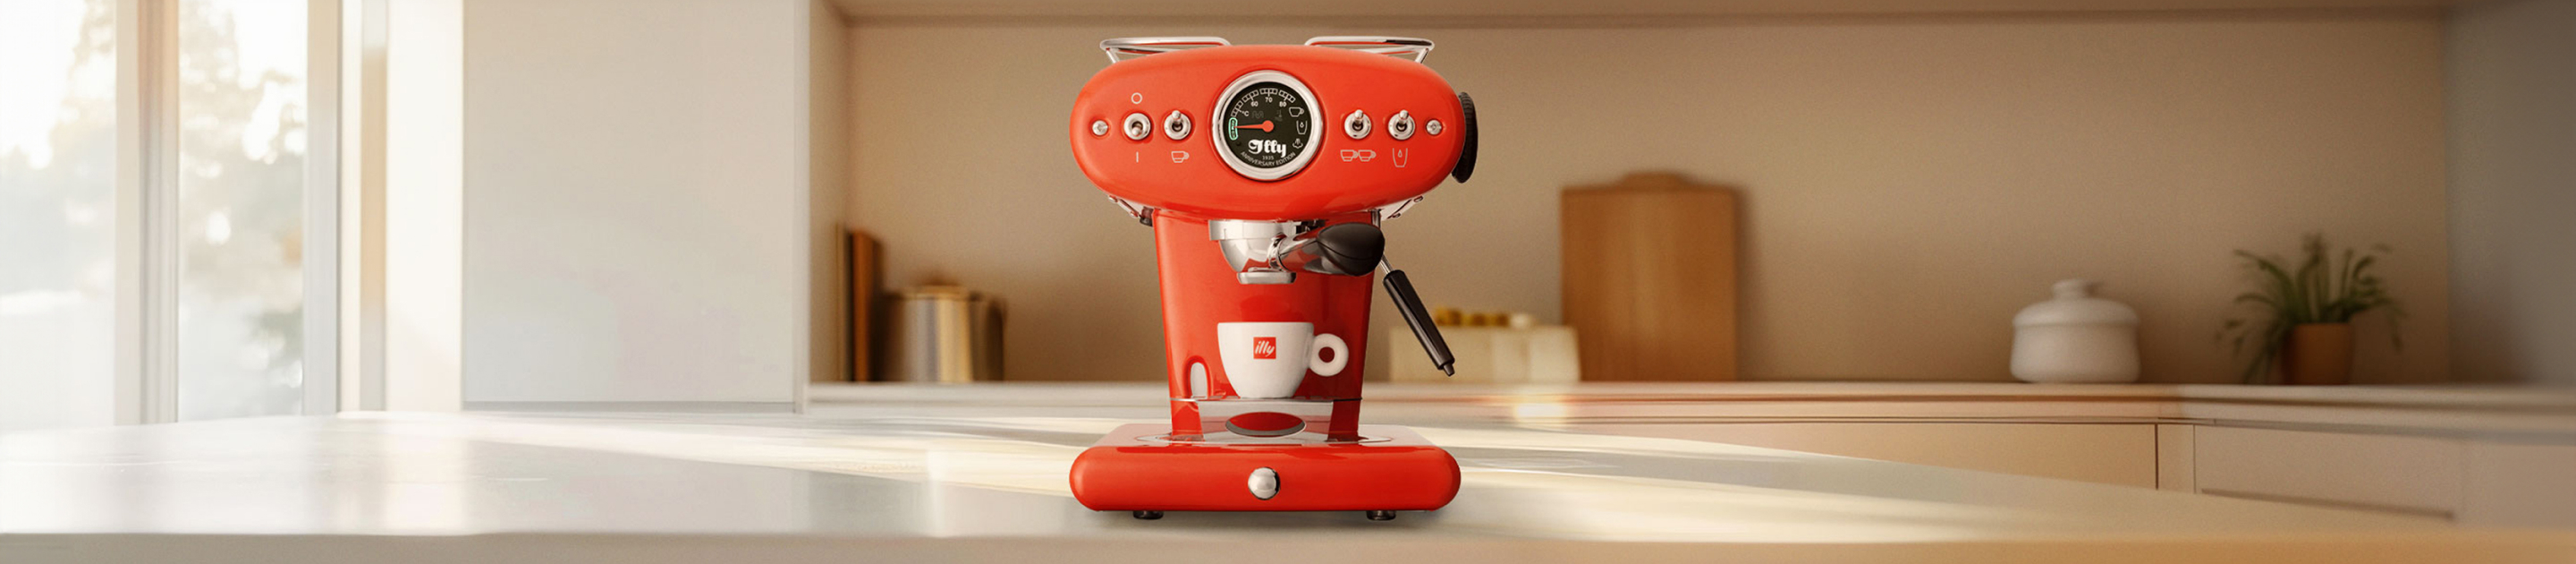 Machines voor gemalen koffie